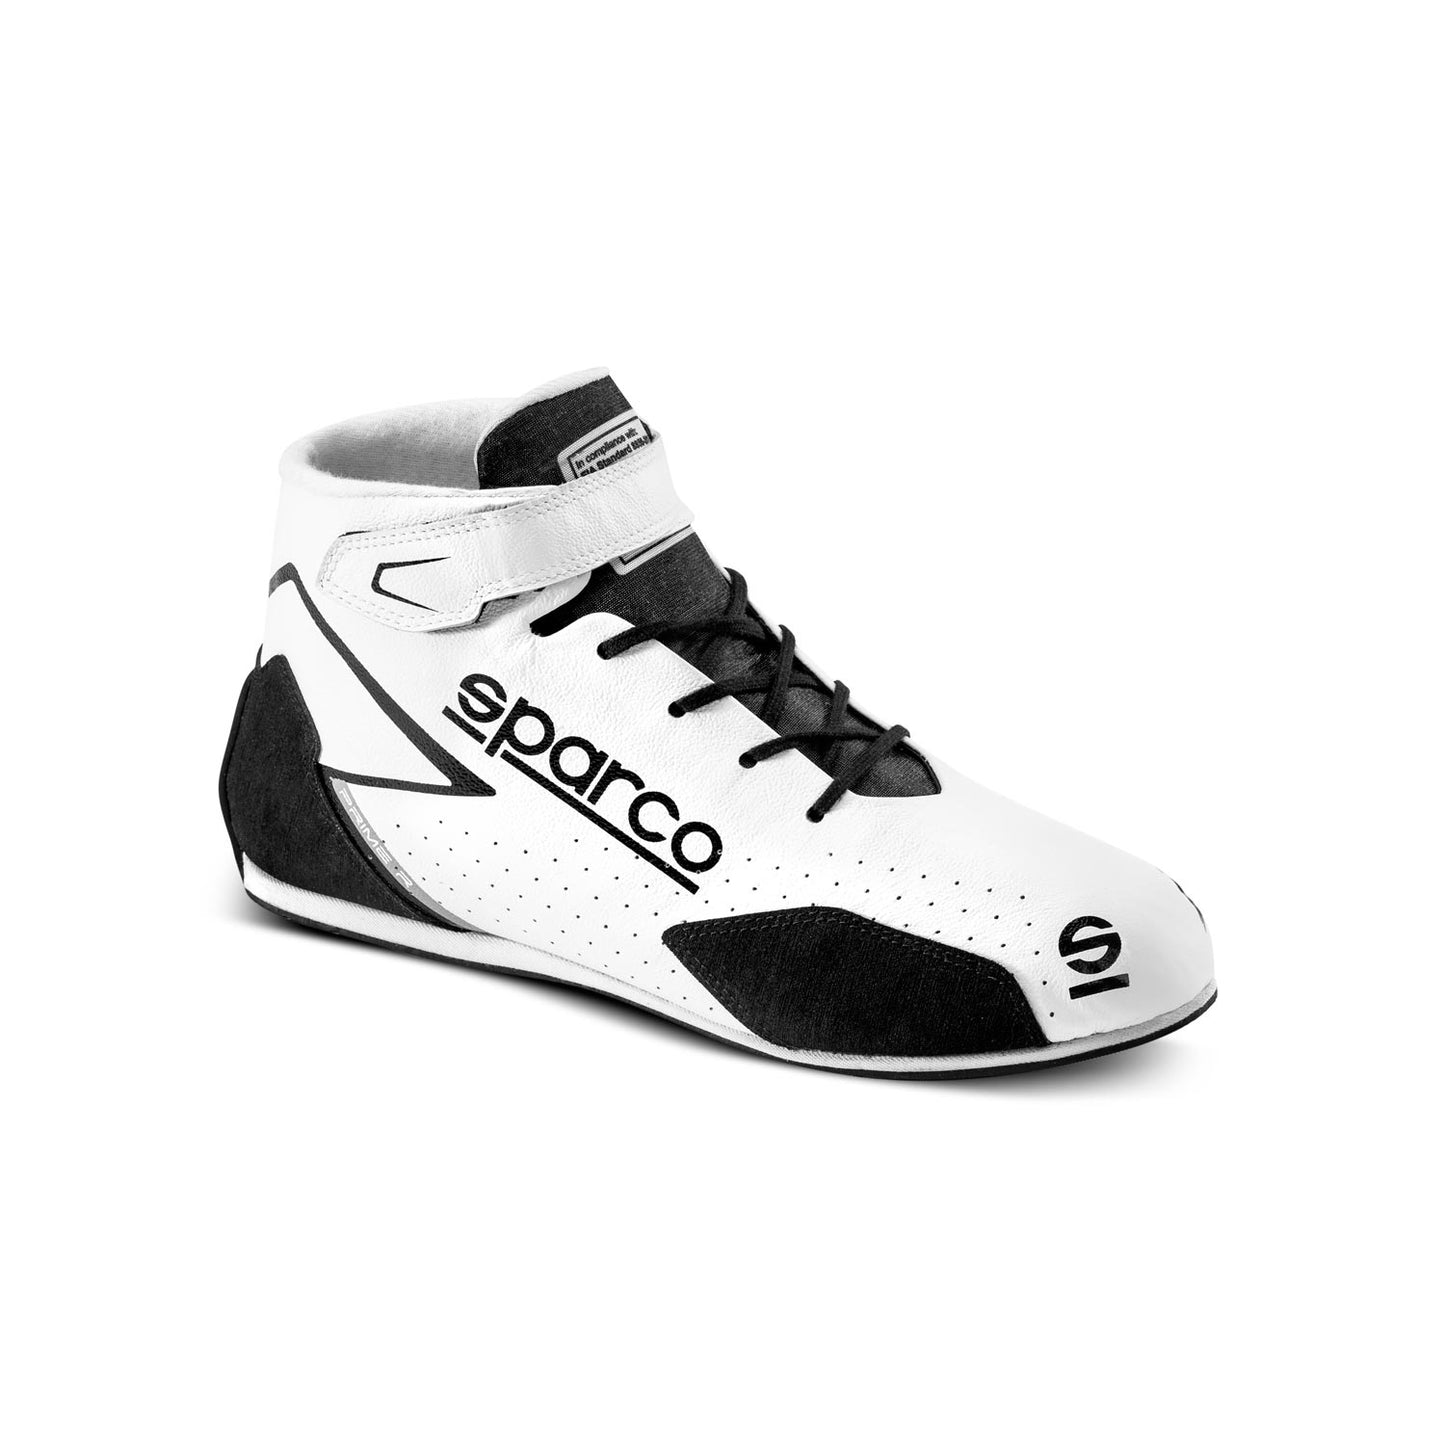 Sparco PRIME R Racing Shoes (FIA)